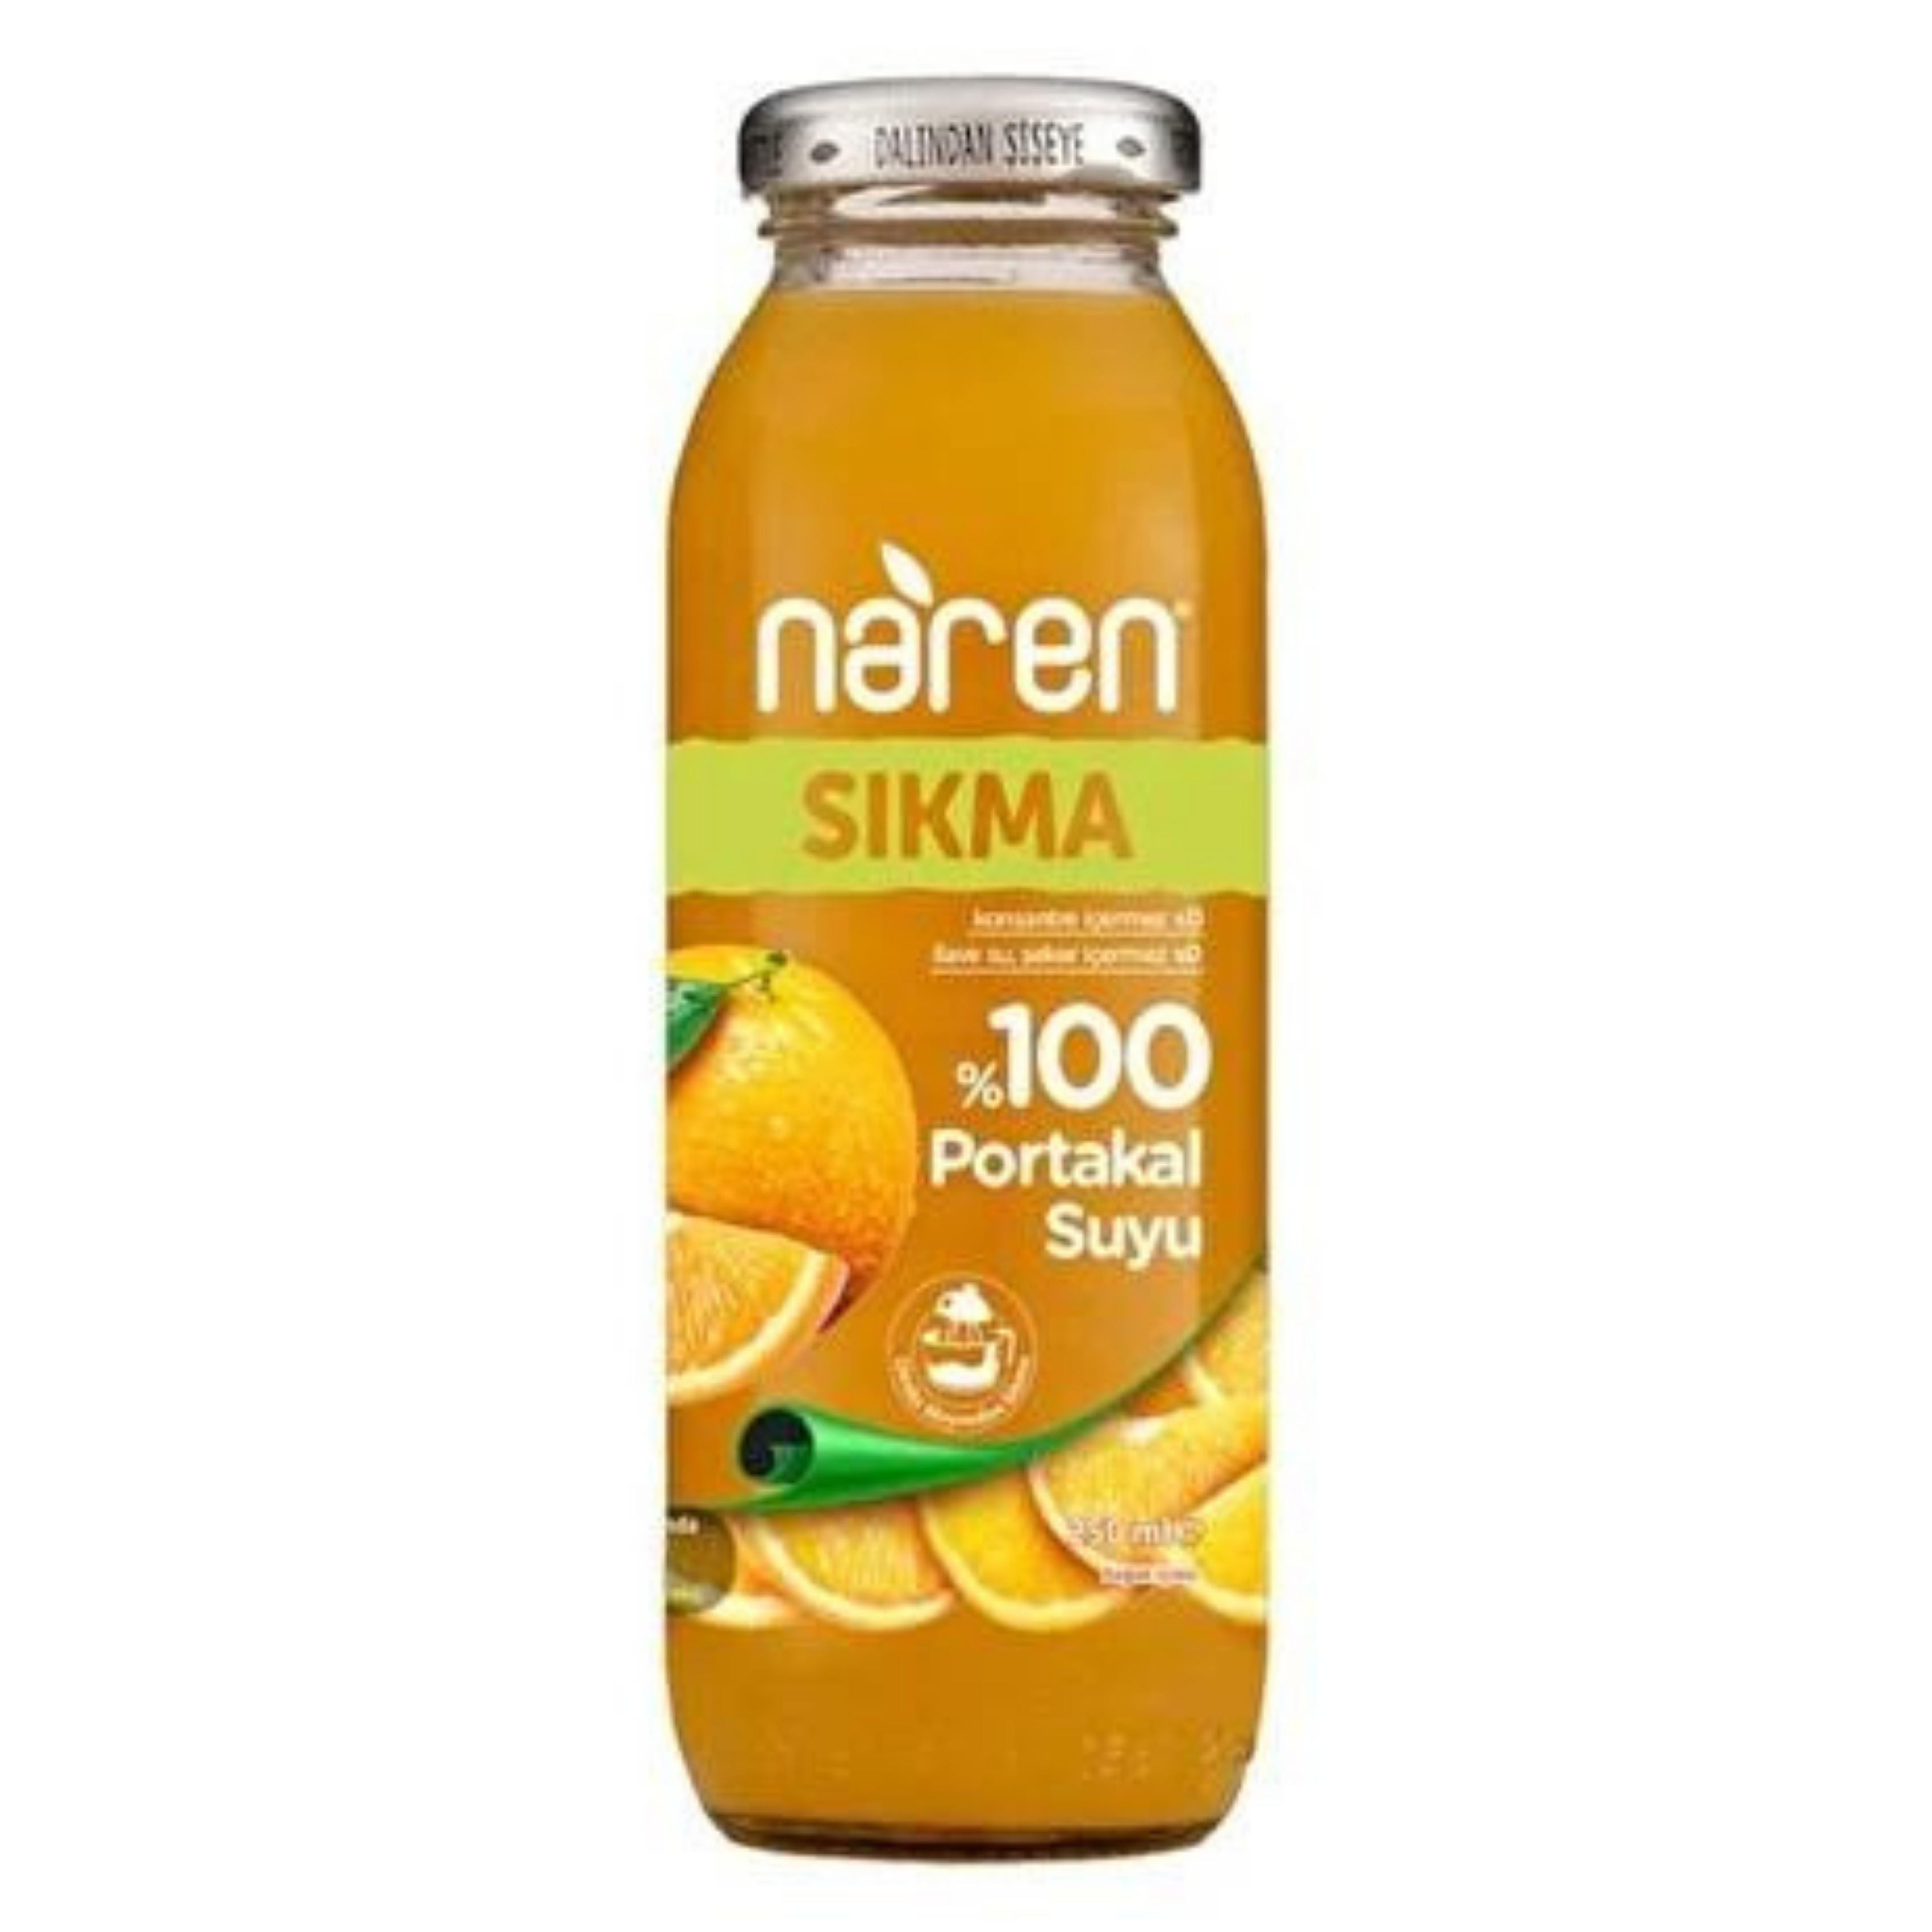 Naren %100 Sıkma Portakal Suyu 250ml